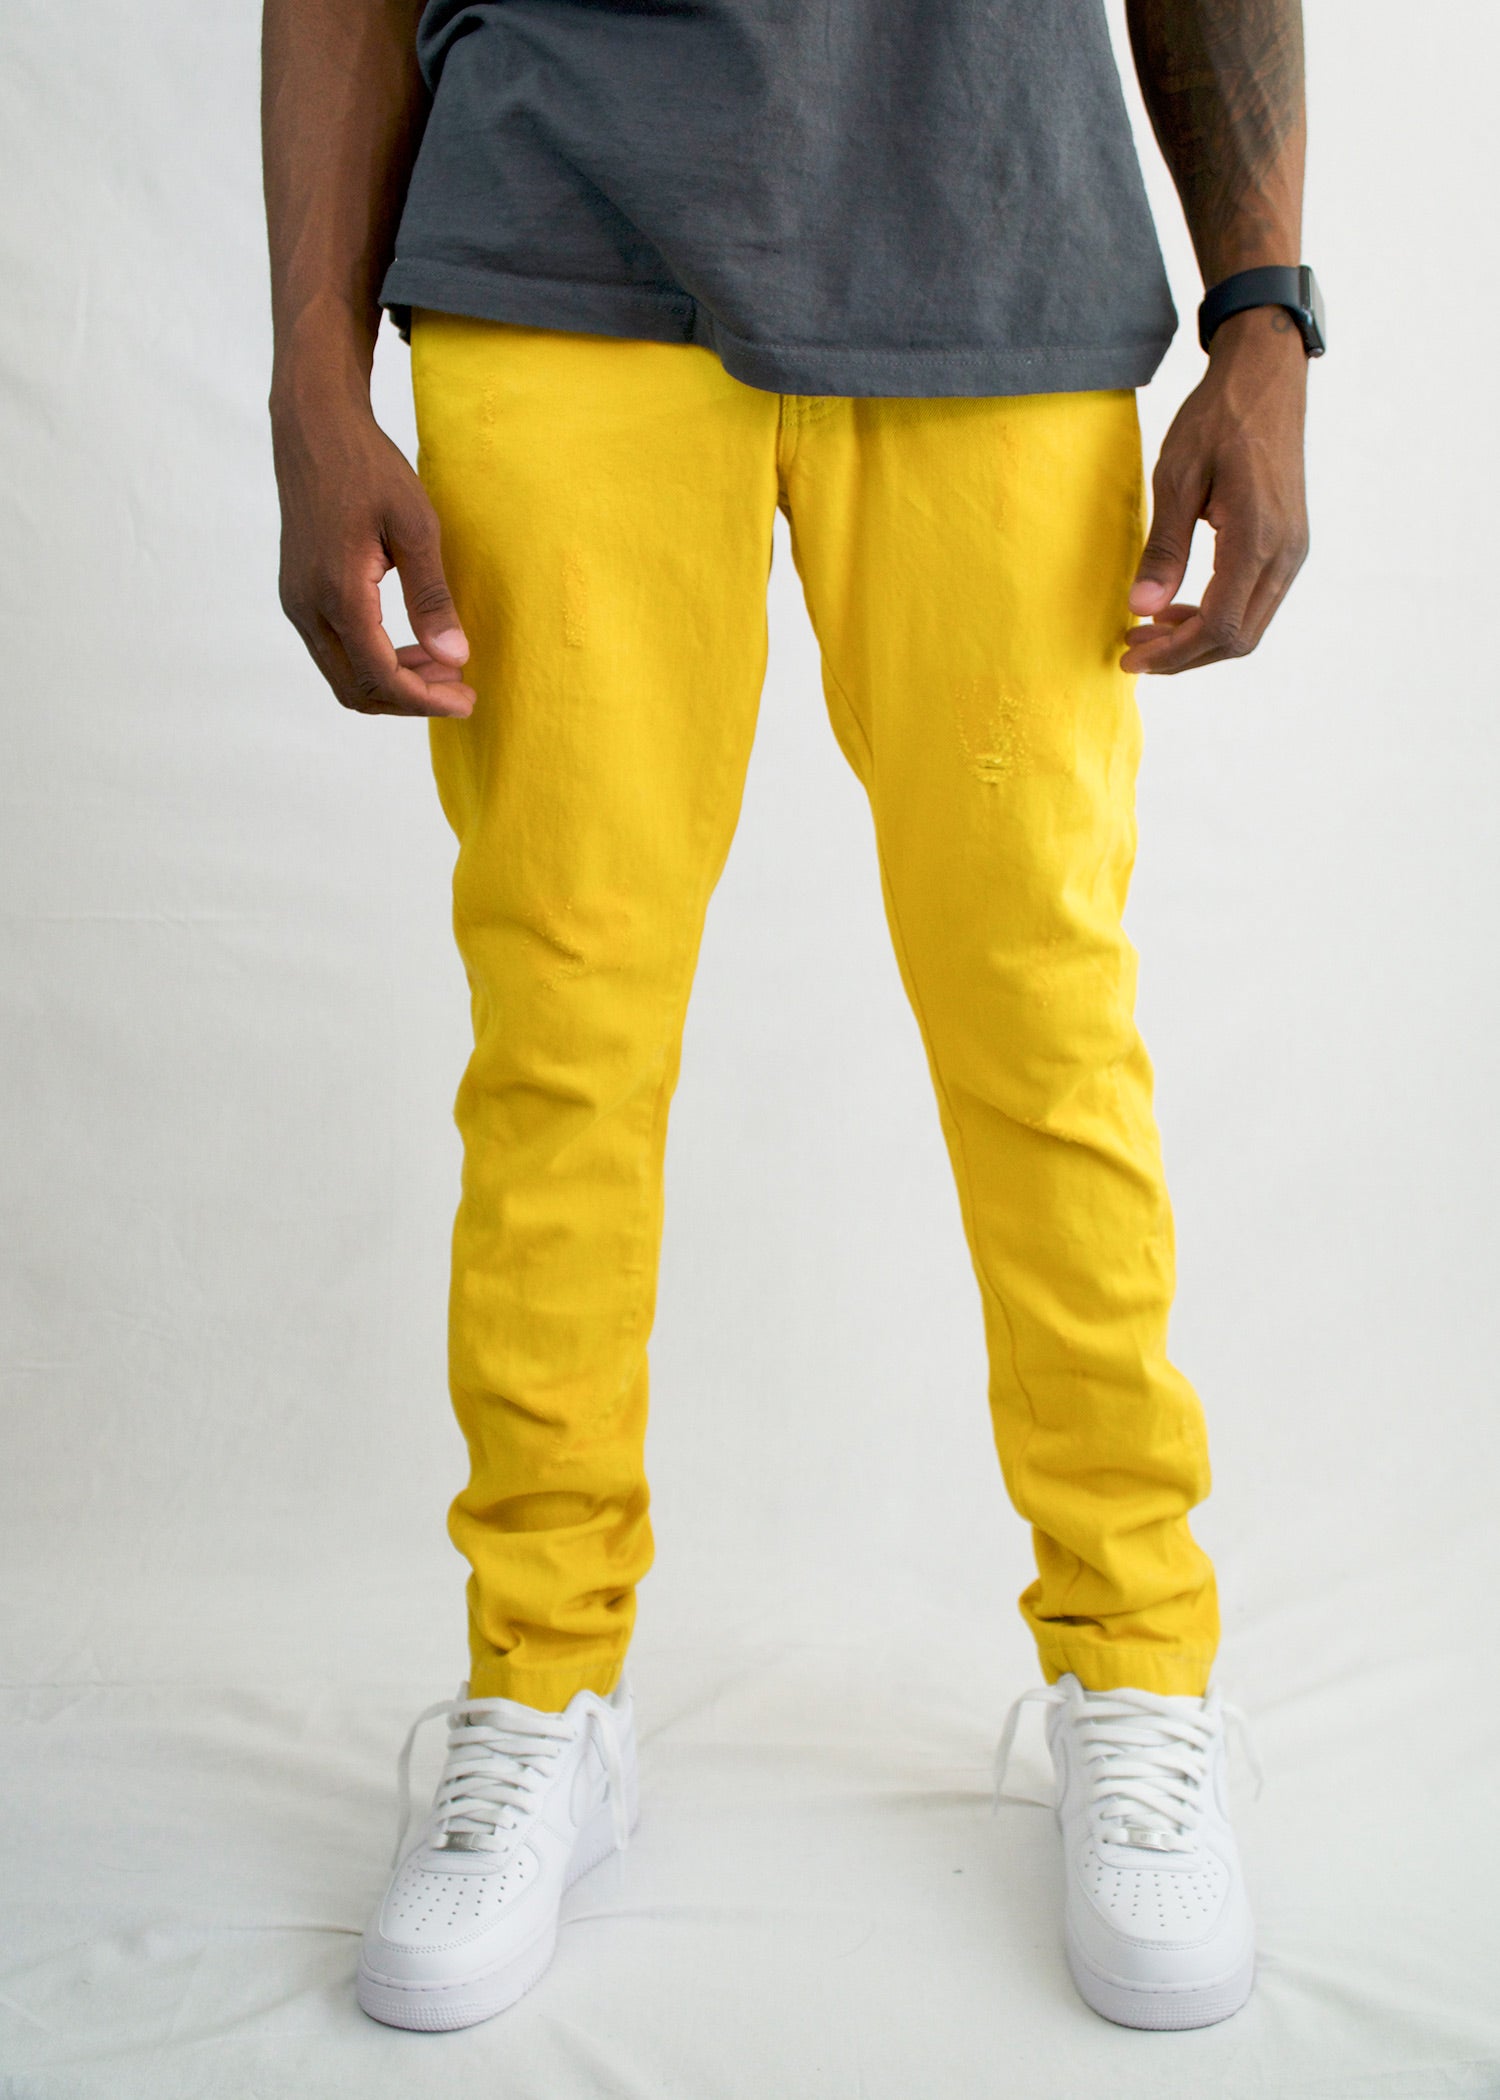 Herringbone Skinny Fit Stacked Jeans Yellow - 95denim